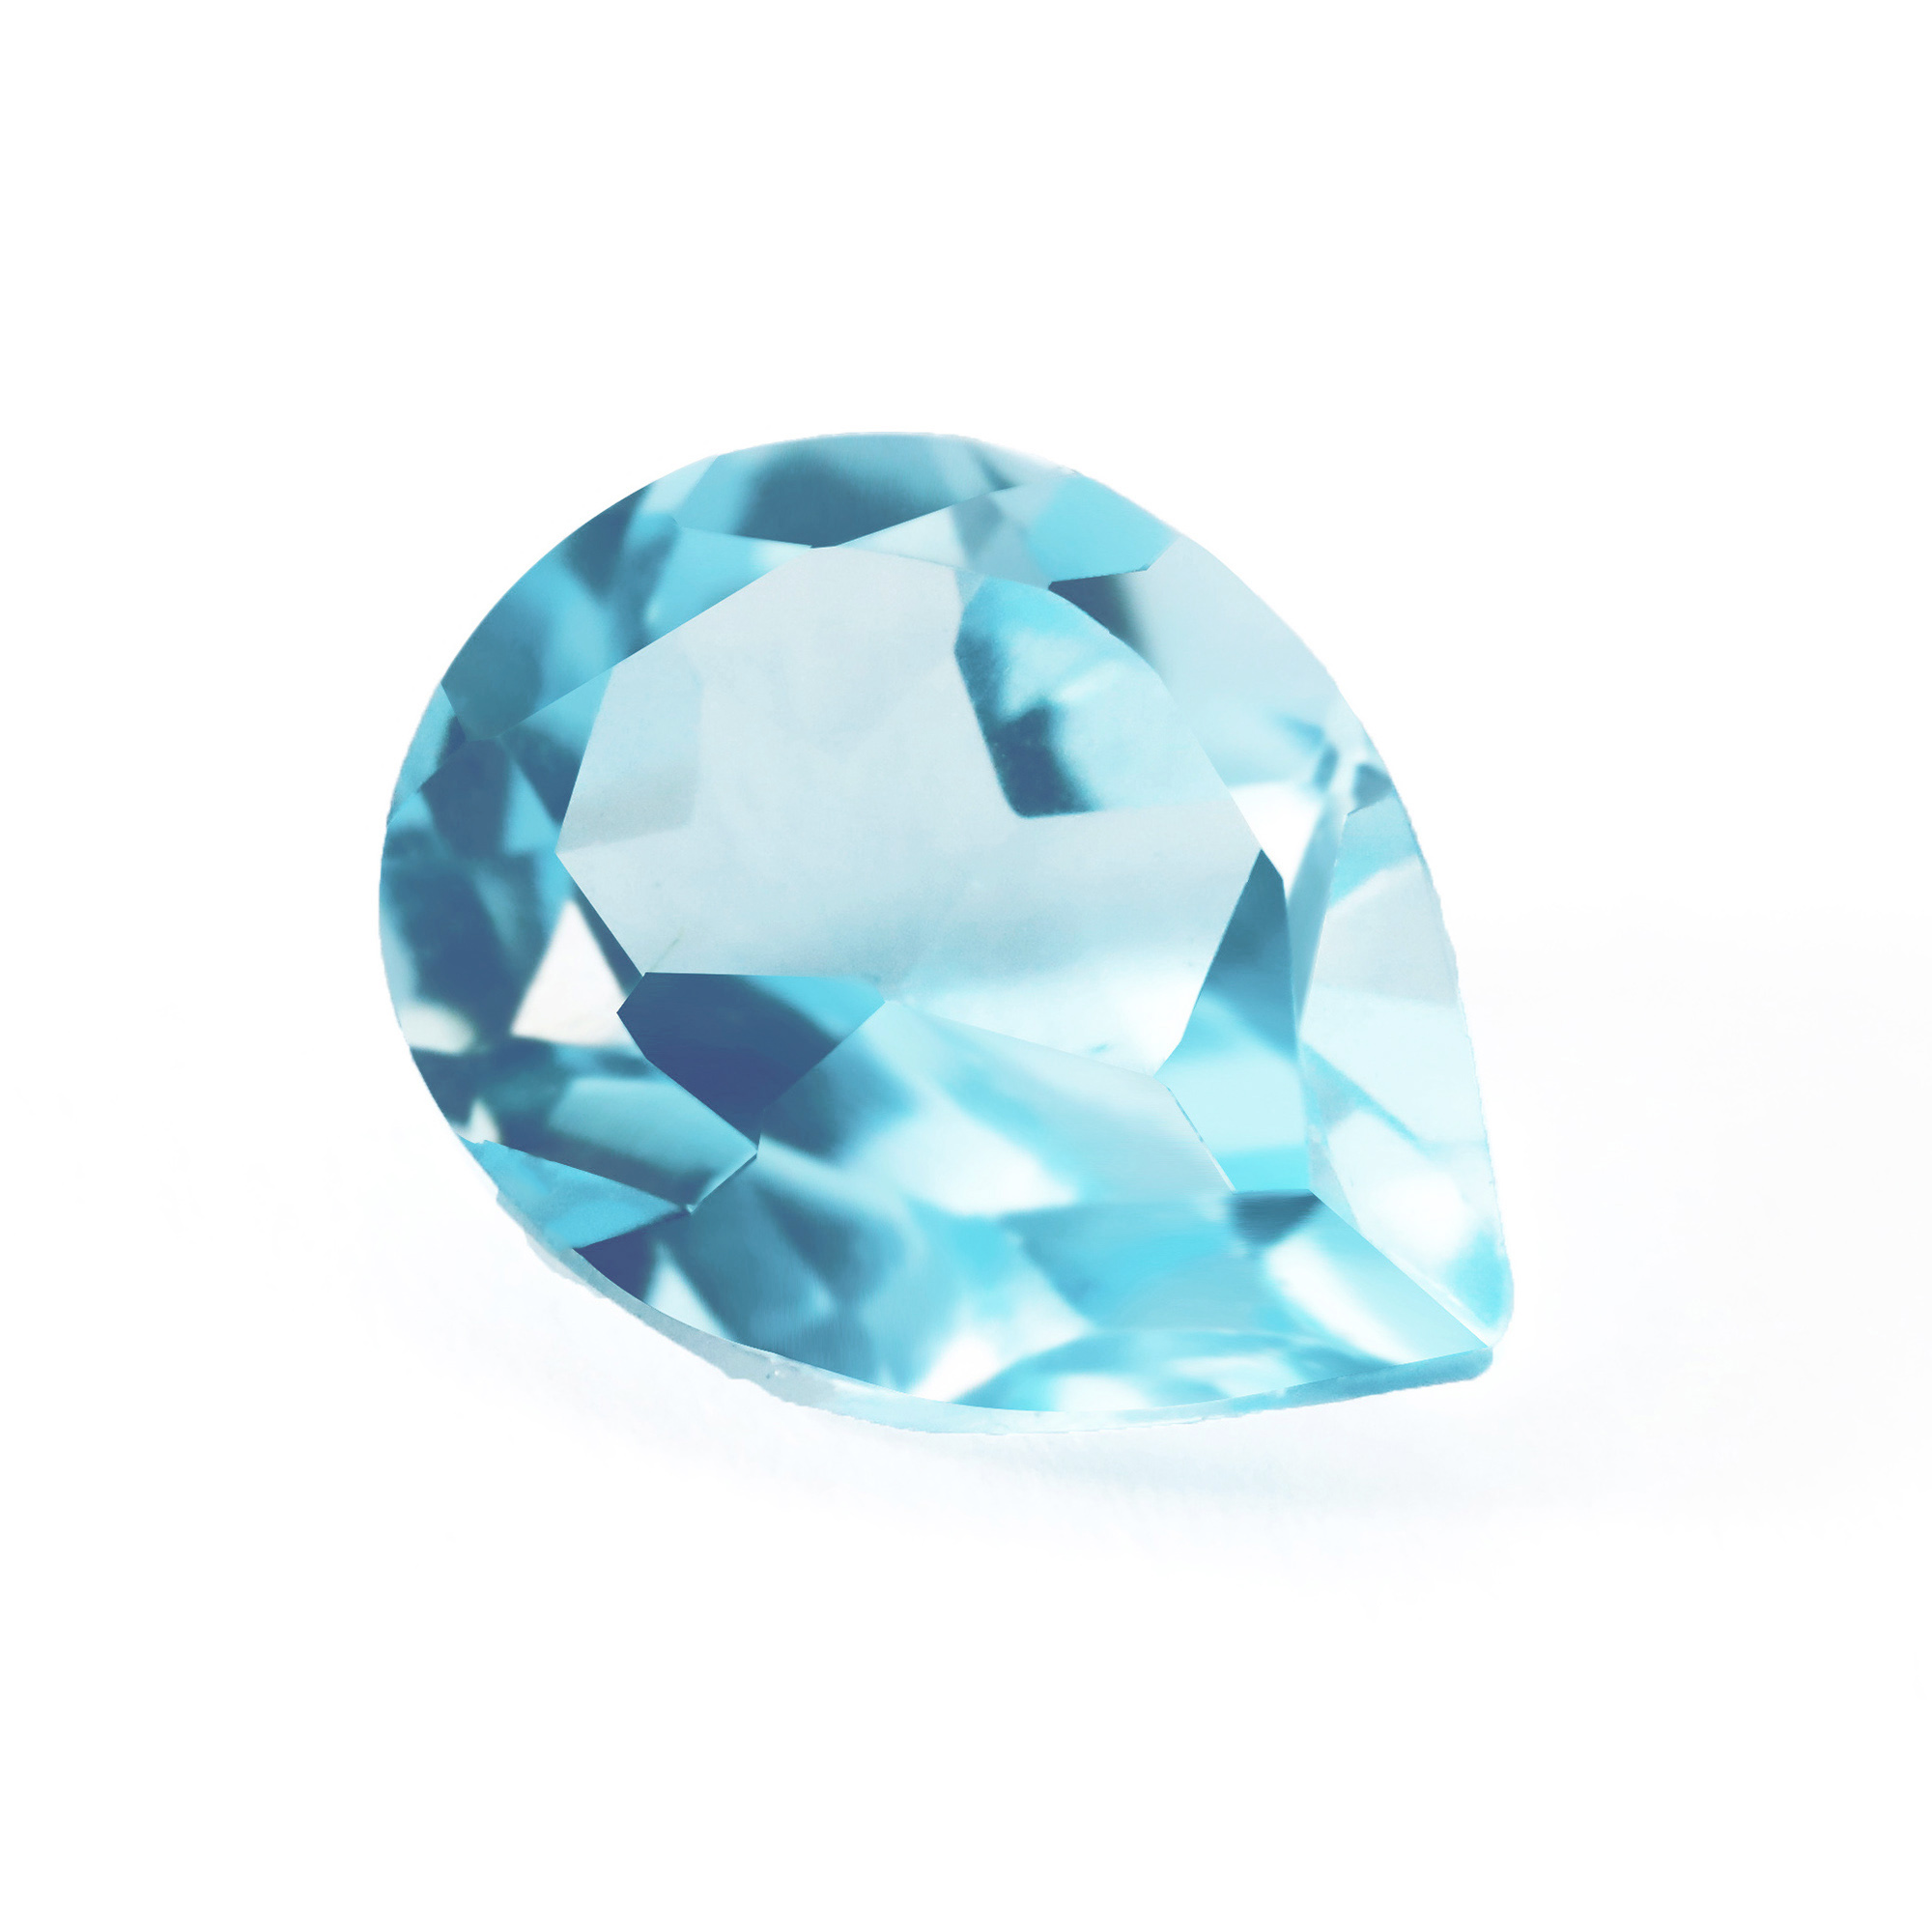 Natural Pear Faceted Sky Blue Topaz Gemstone November Birthstone DIY Loose Semi Precious Gemstone DIY Jewelry Supplies 4150019 - Click Image to Close